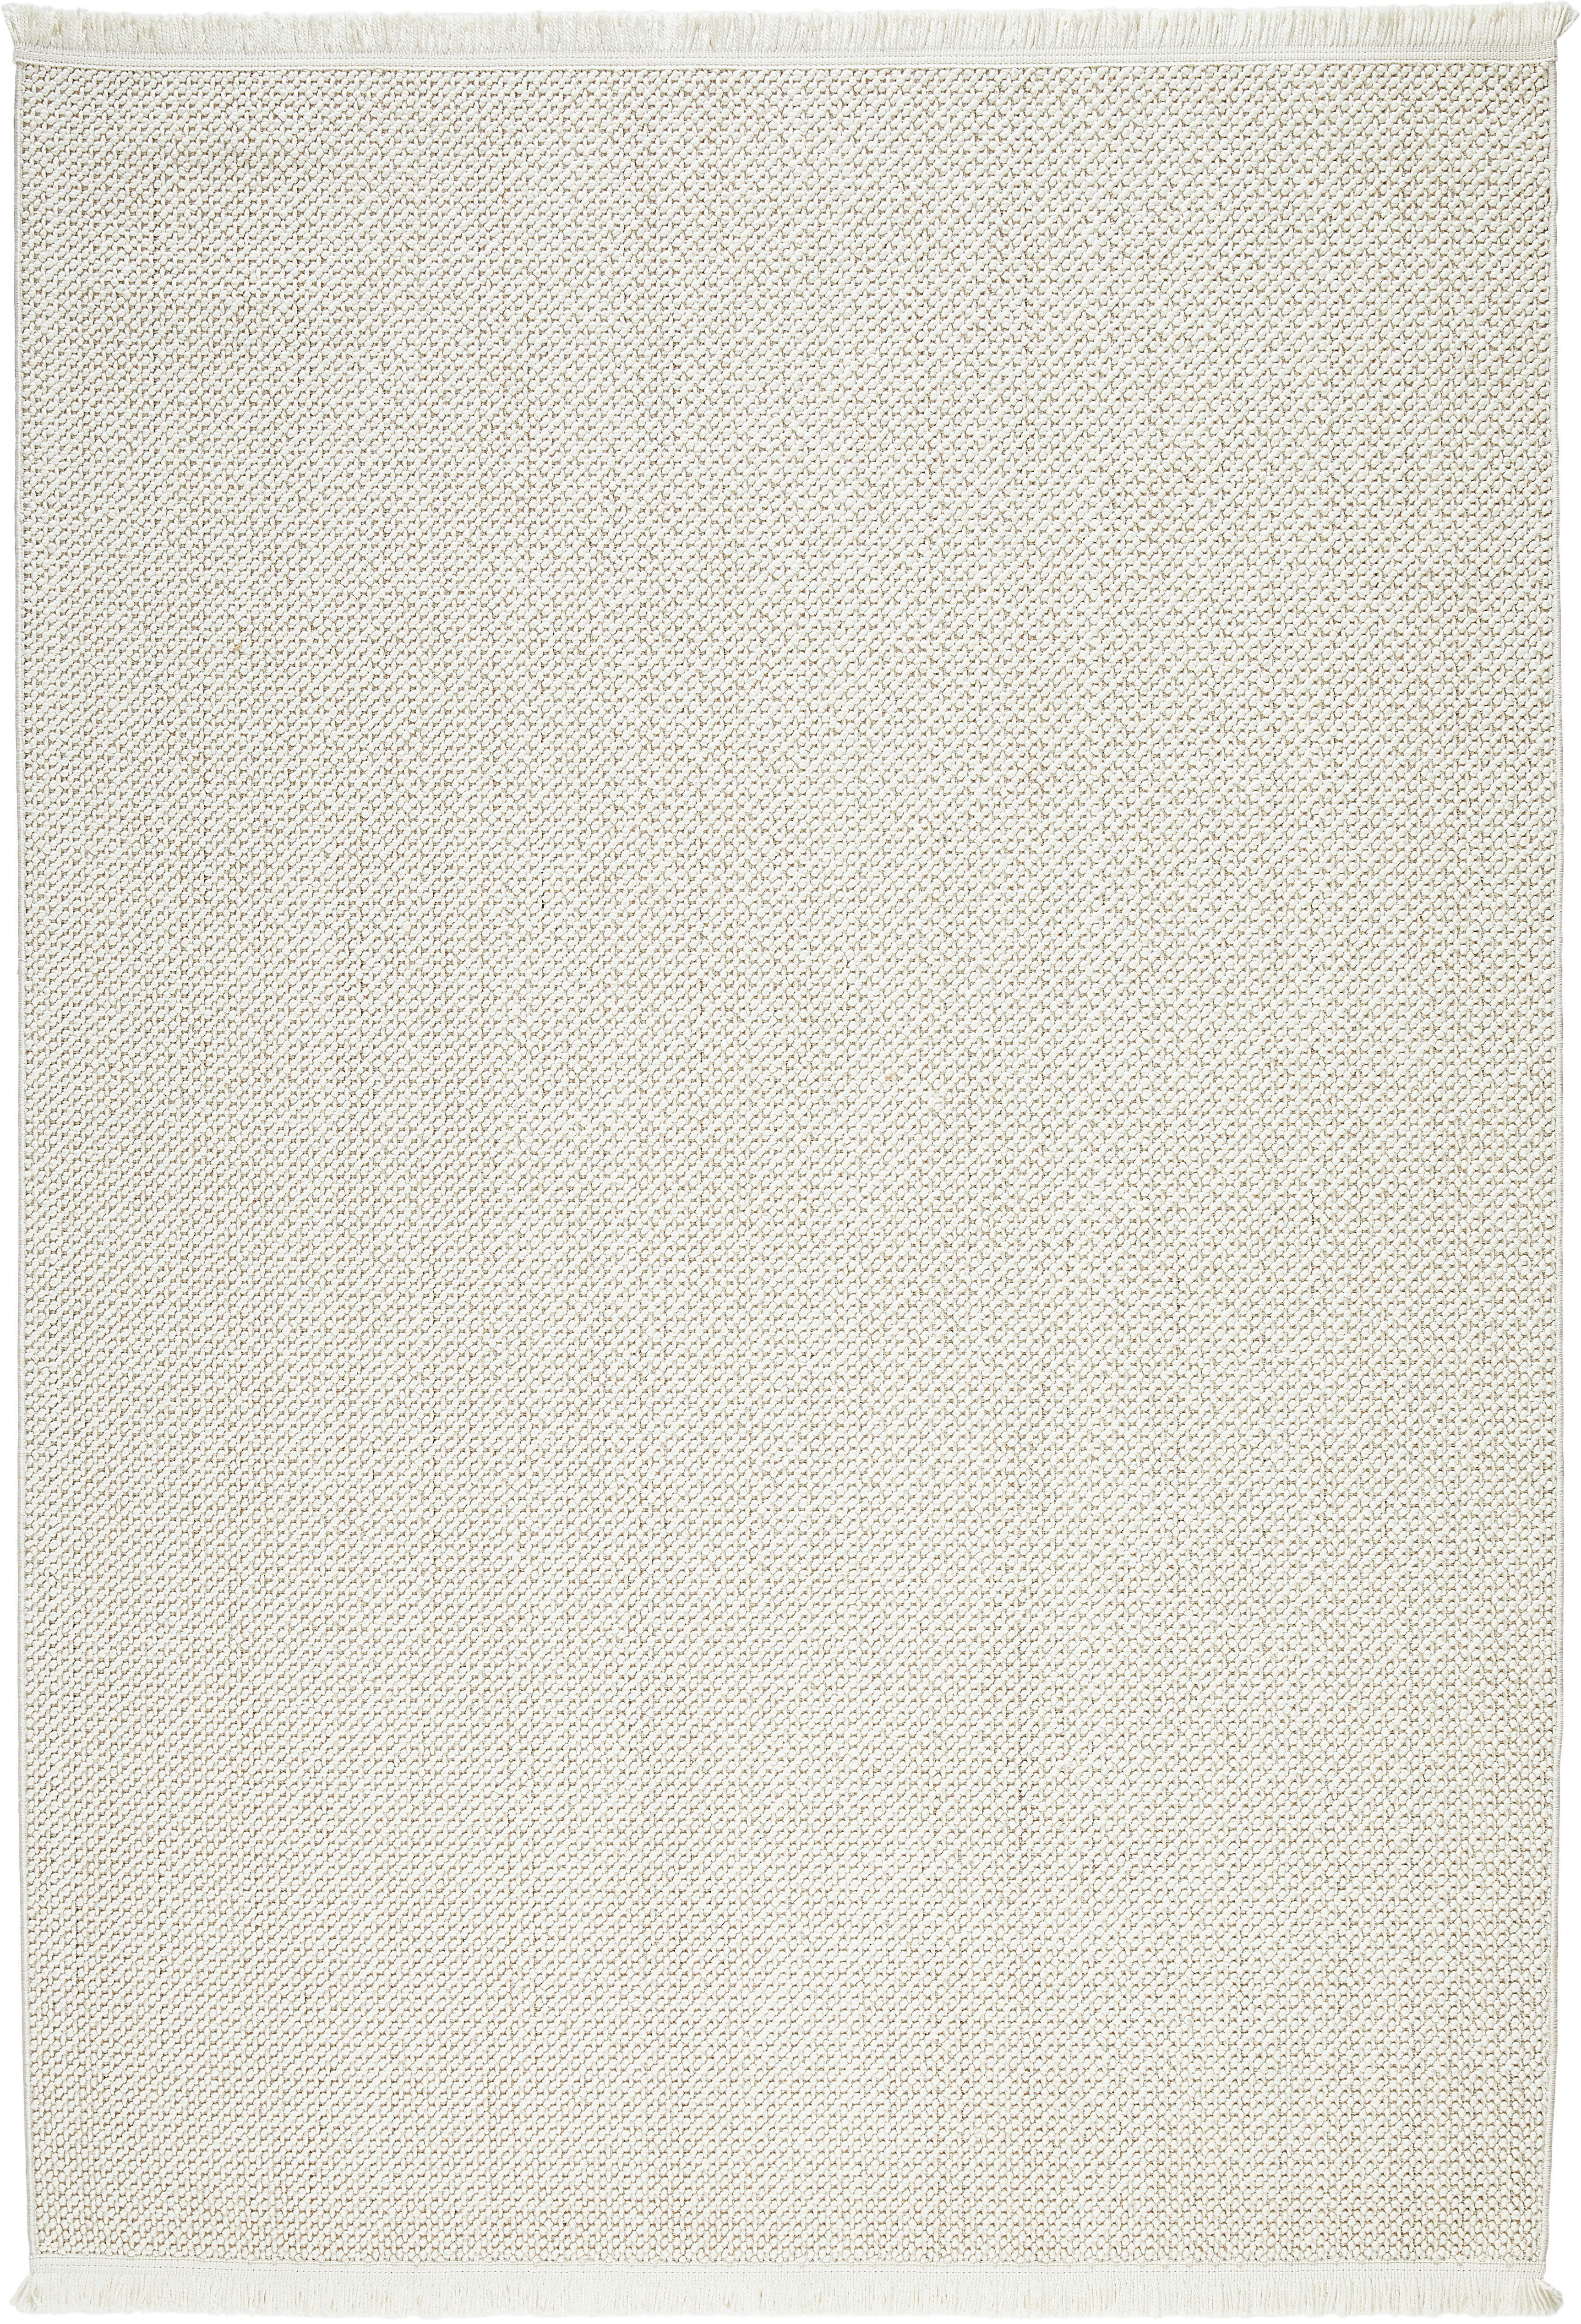 WEBTEPPICH 120/170 cm  - Weiß, Basics, Textil (120/170cm) - Novel